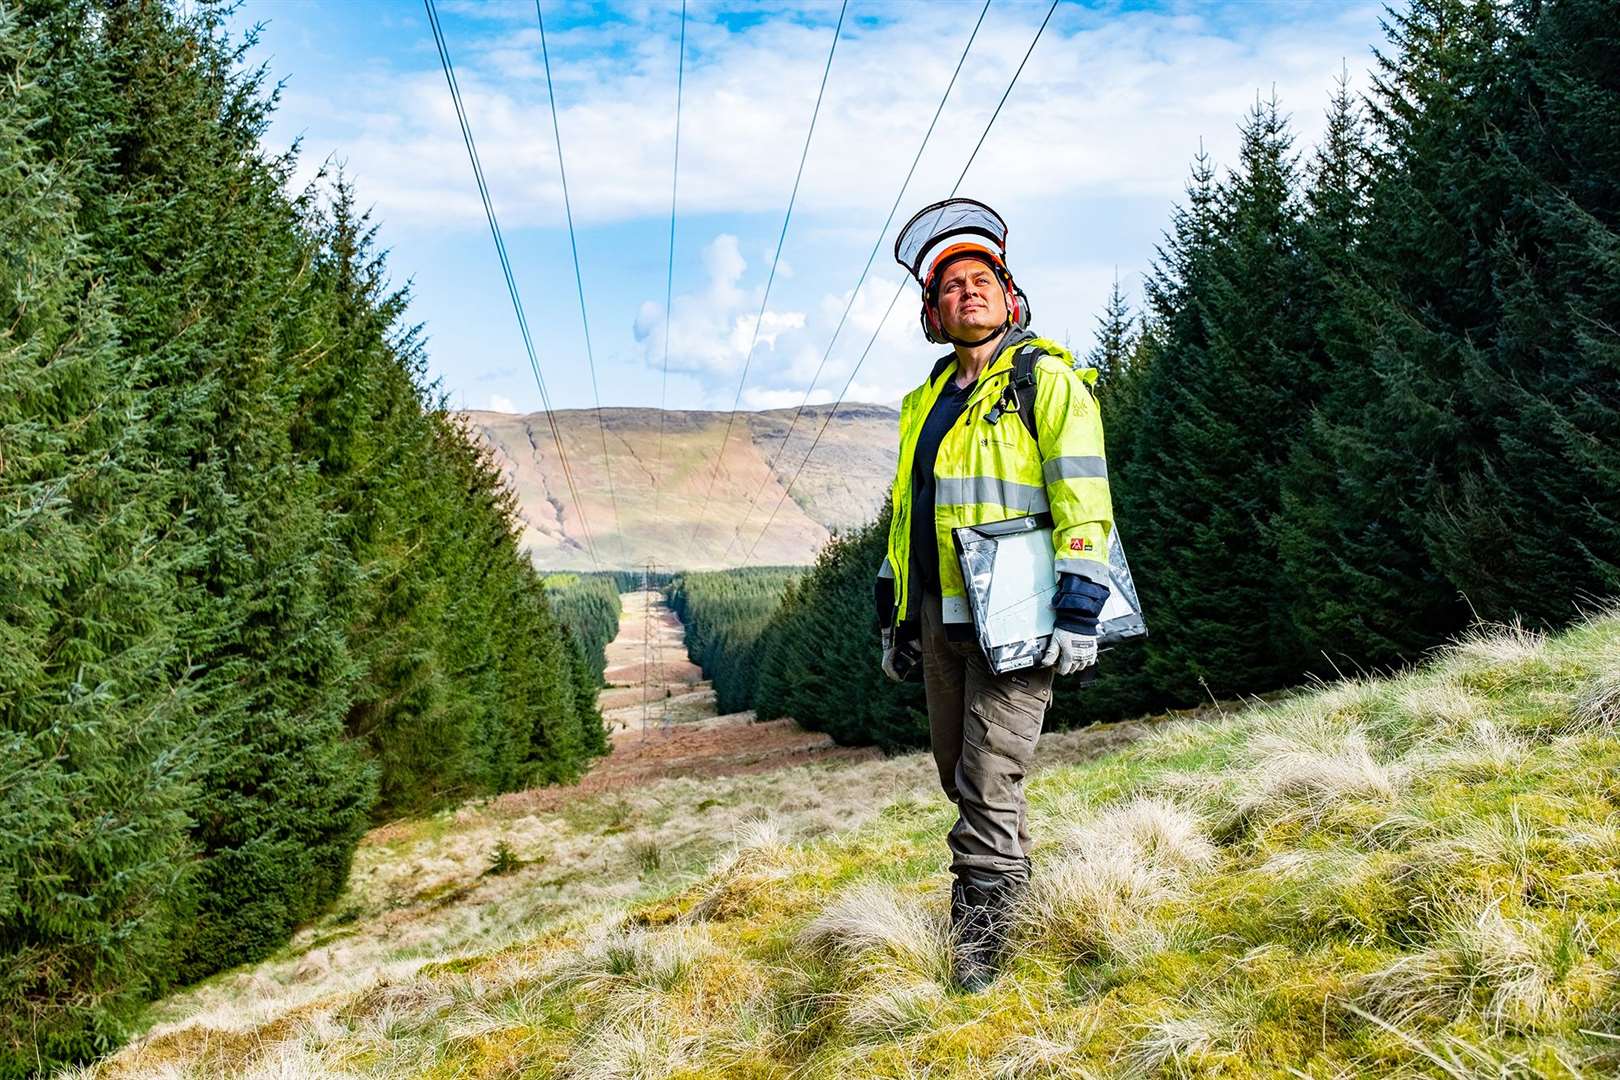 SSEN Resilience Surveyor, Matthew Wade conducting a power line survey. ©Stuart Nicol Photography 2022